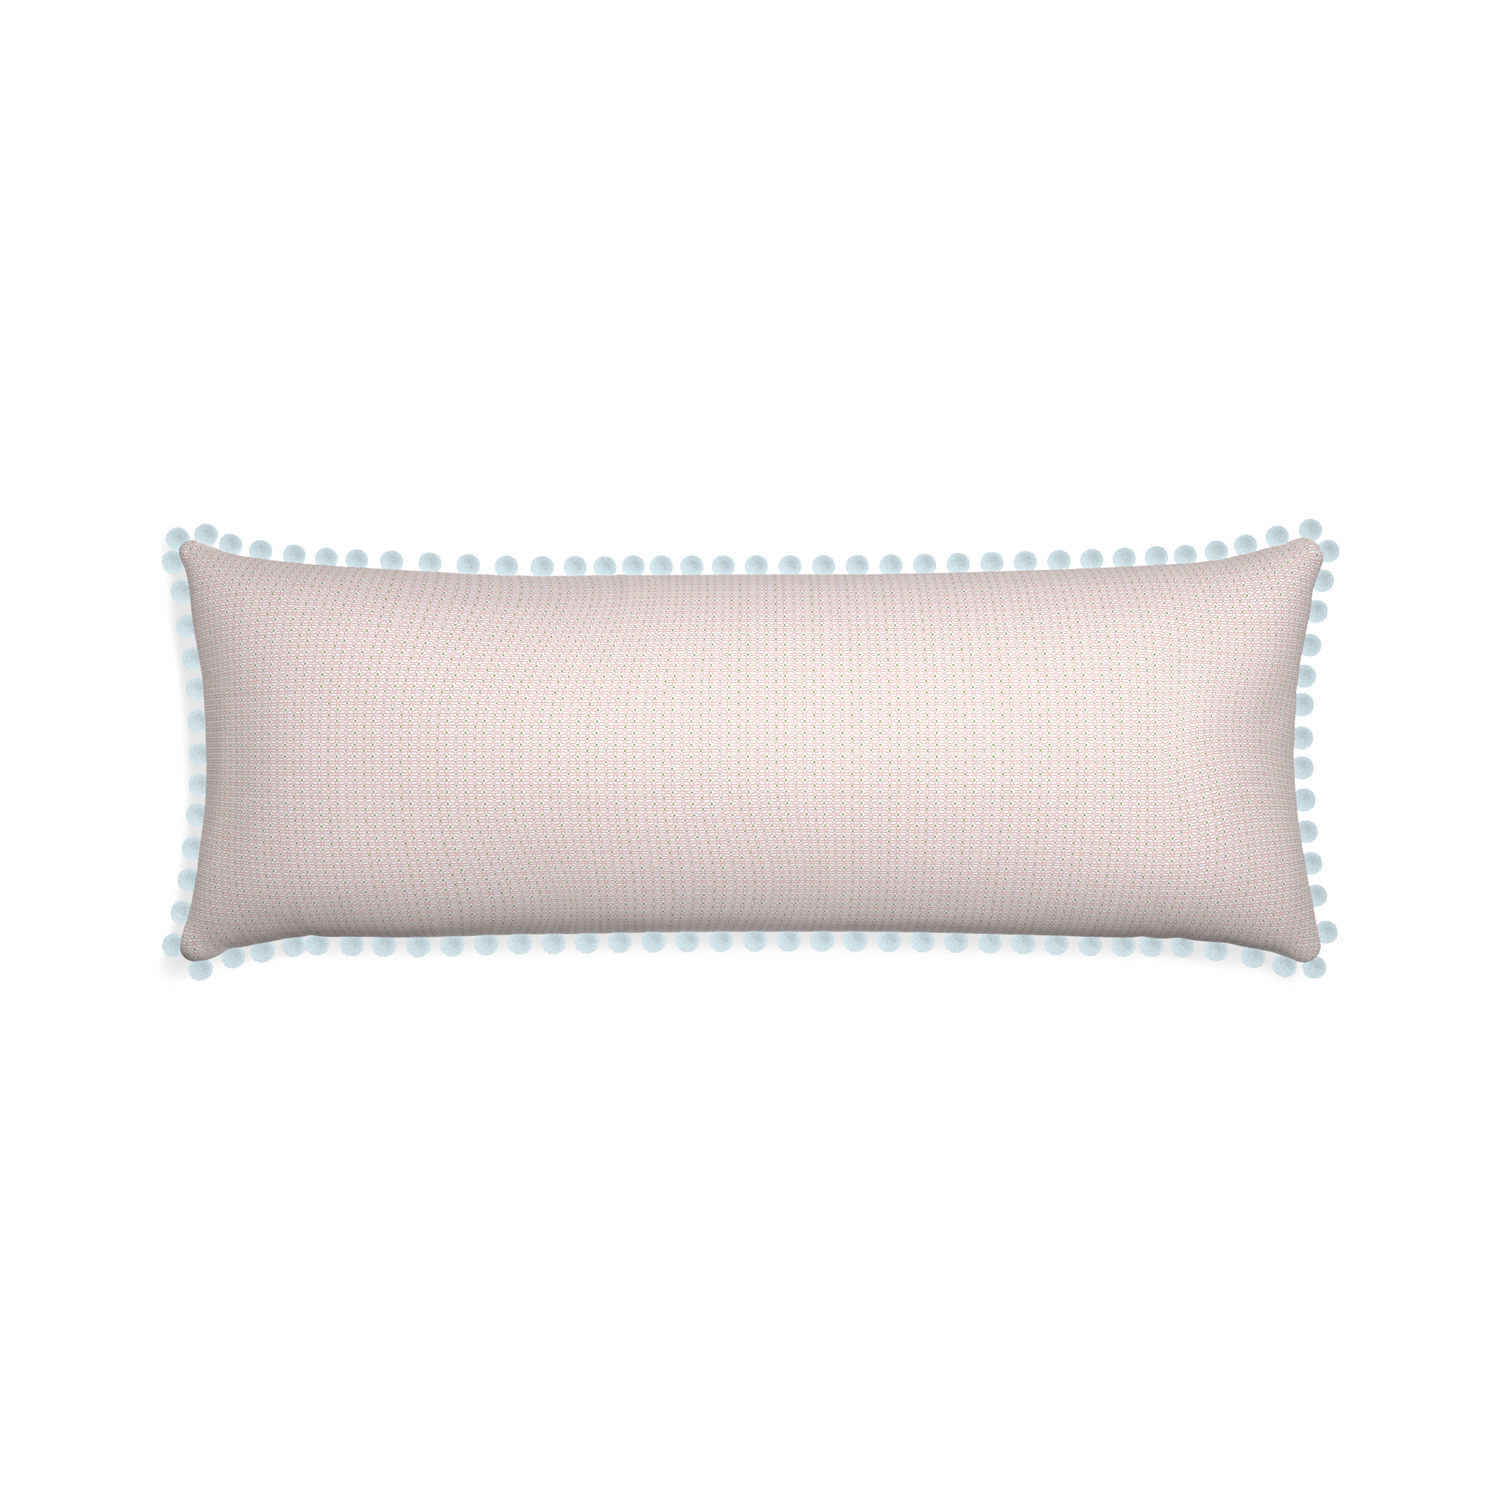 Xl-lumbar loomi pink custom pillow with powder pom pom on white background